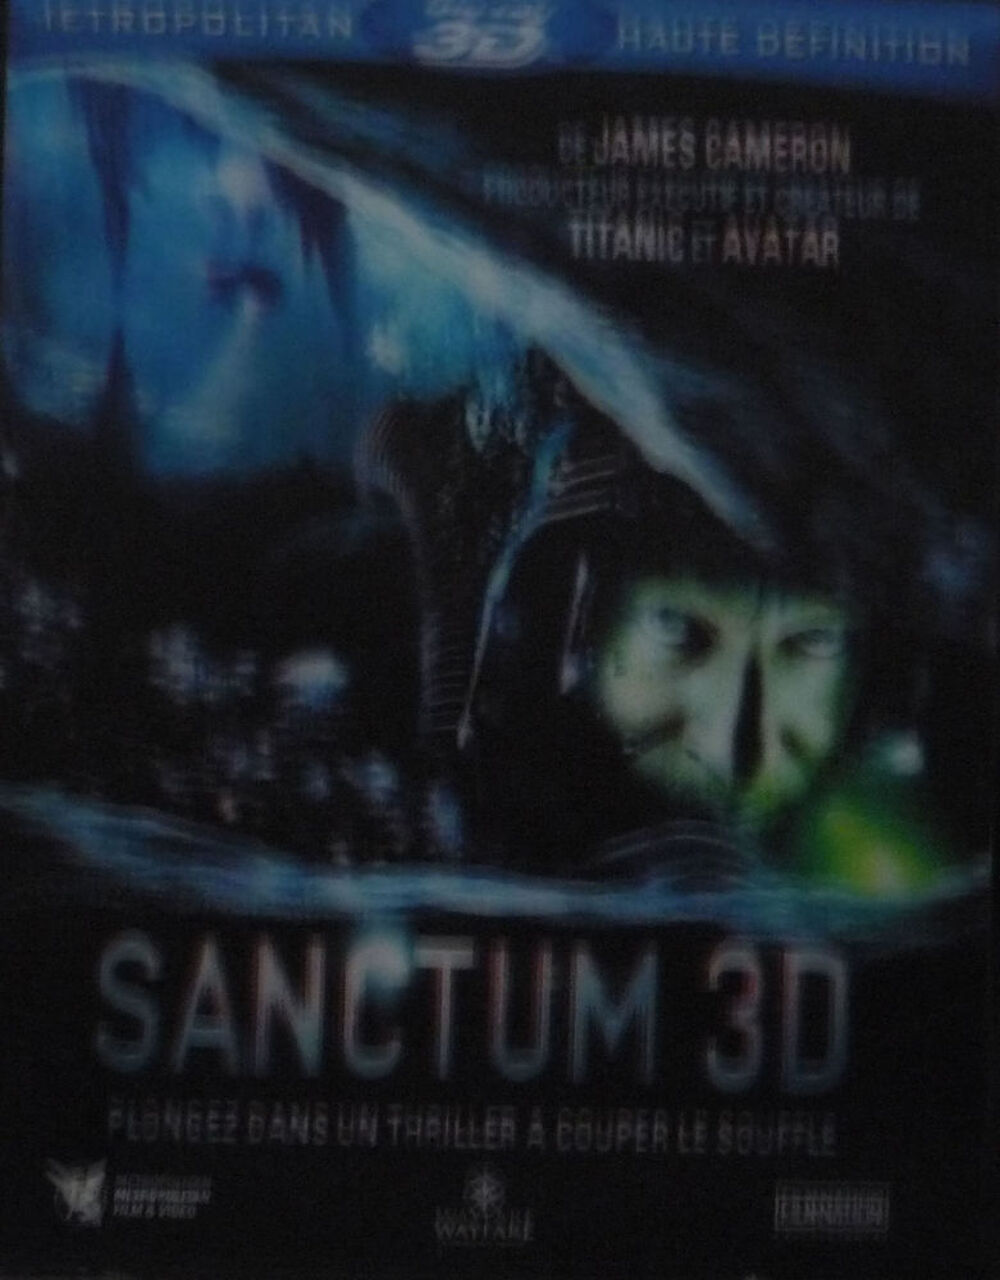 Sanctum 3D DVD et blu-ray